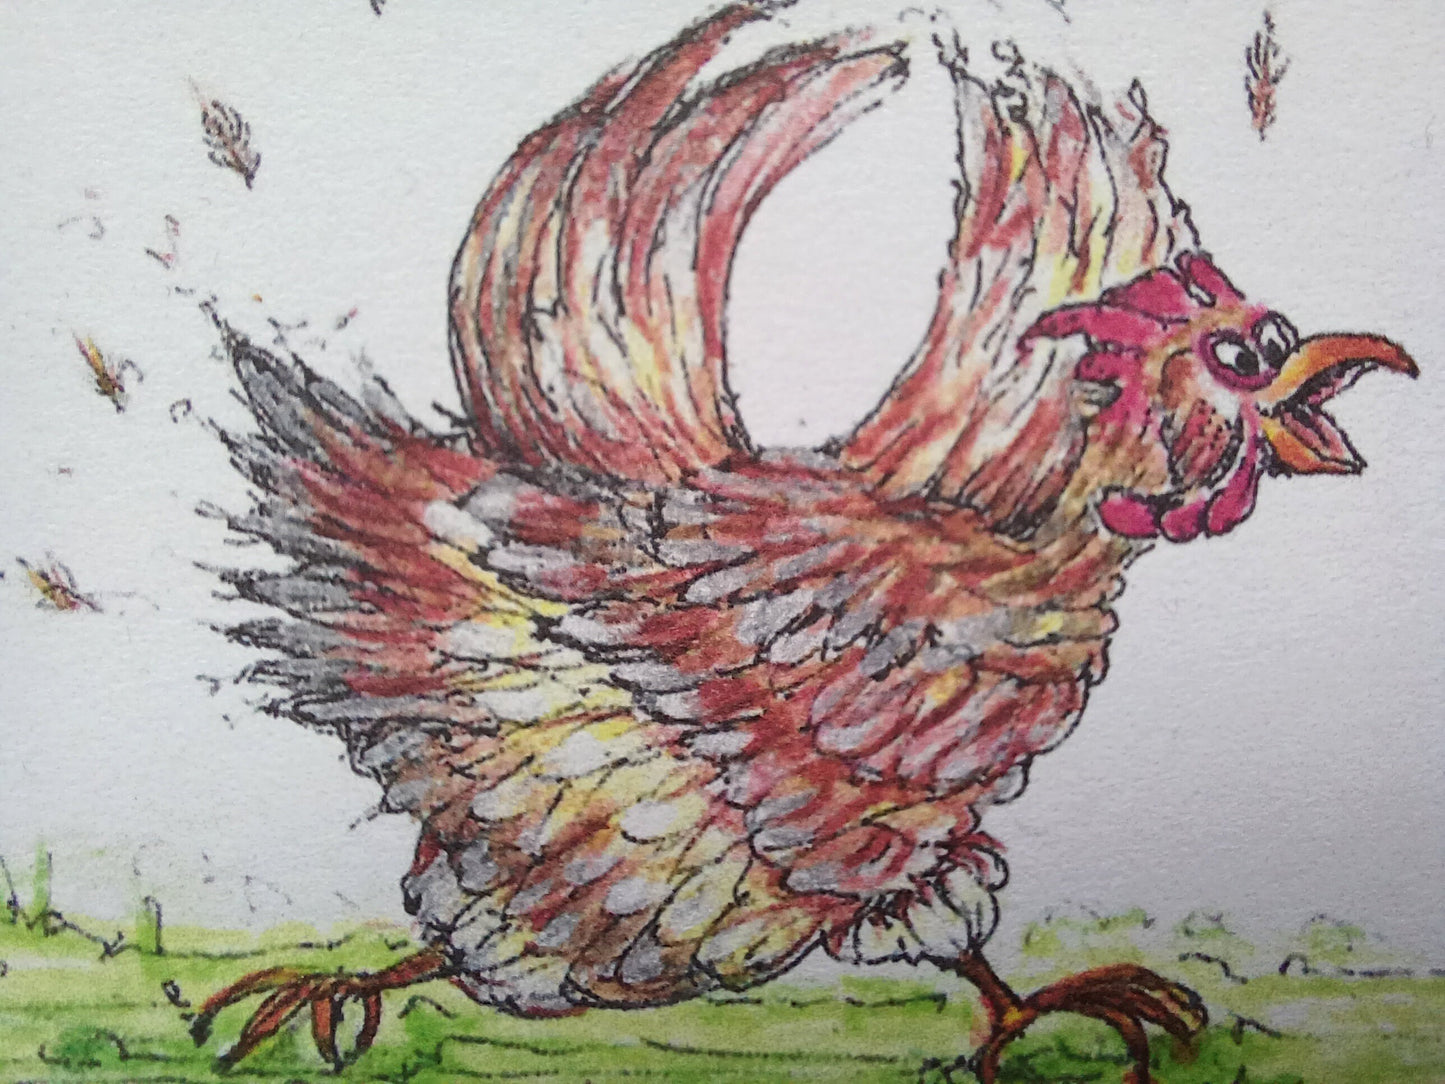 Hase mit Huhn | Ostern | Postkarte A6